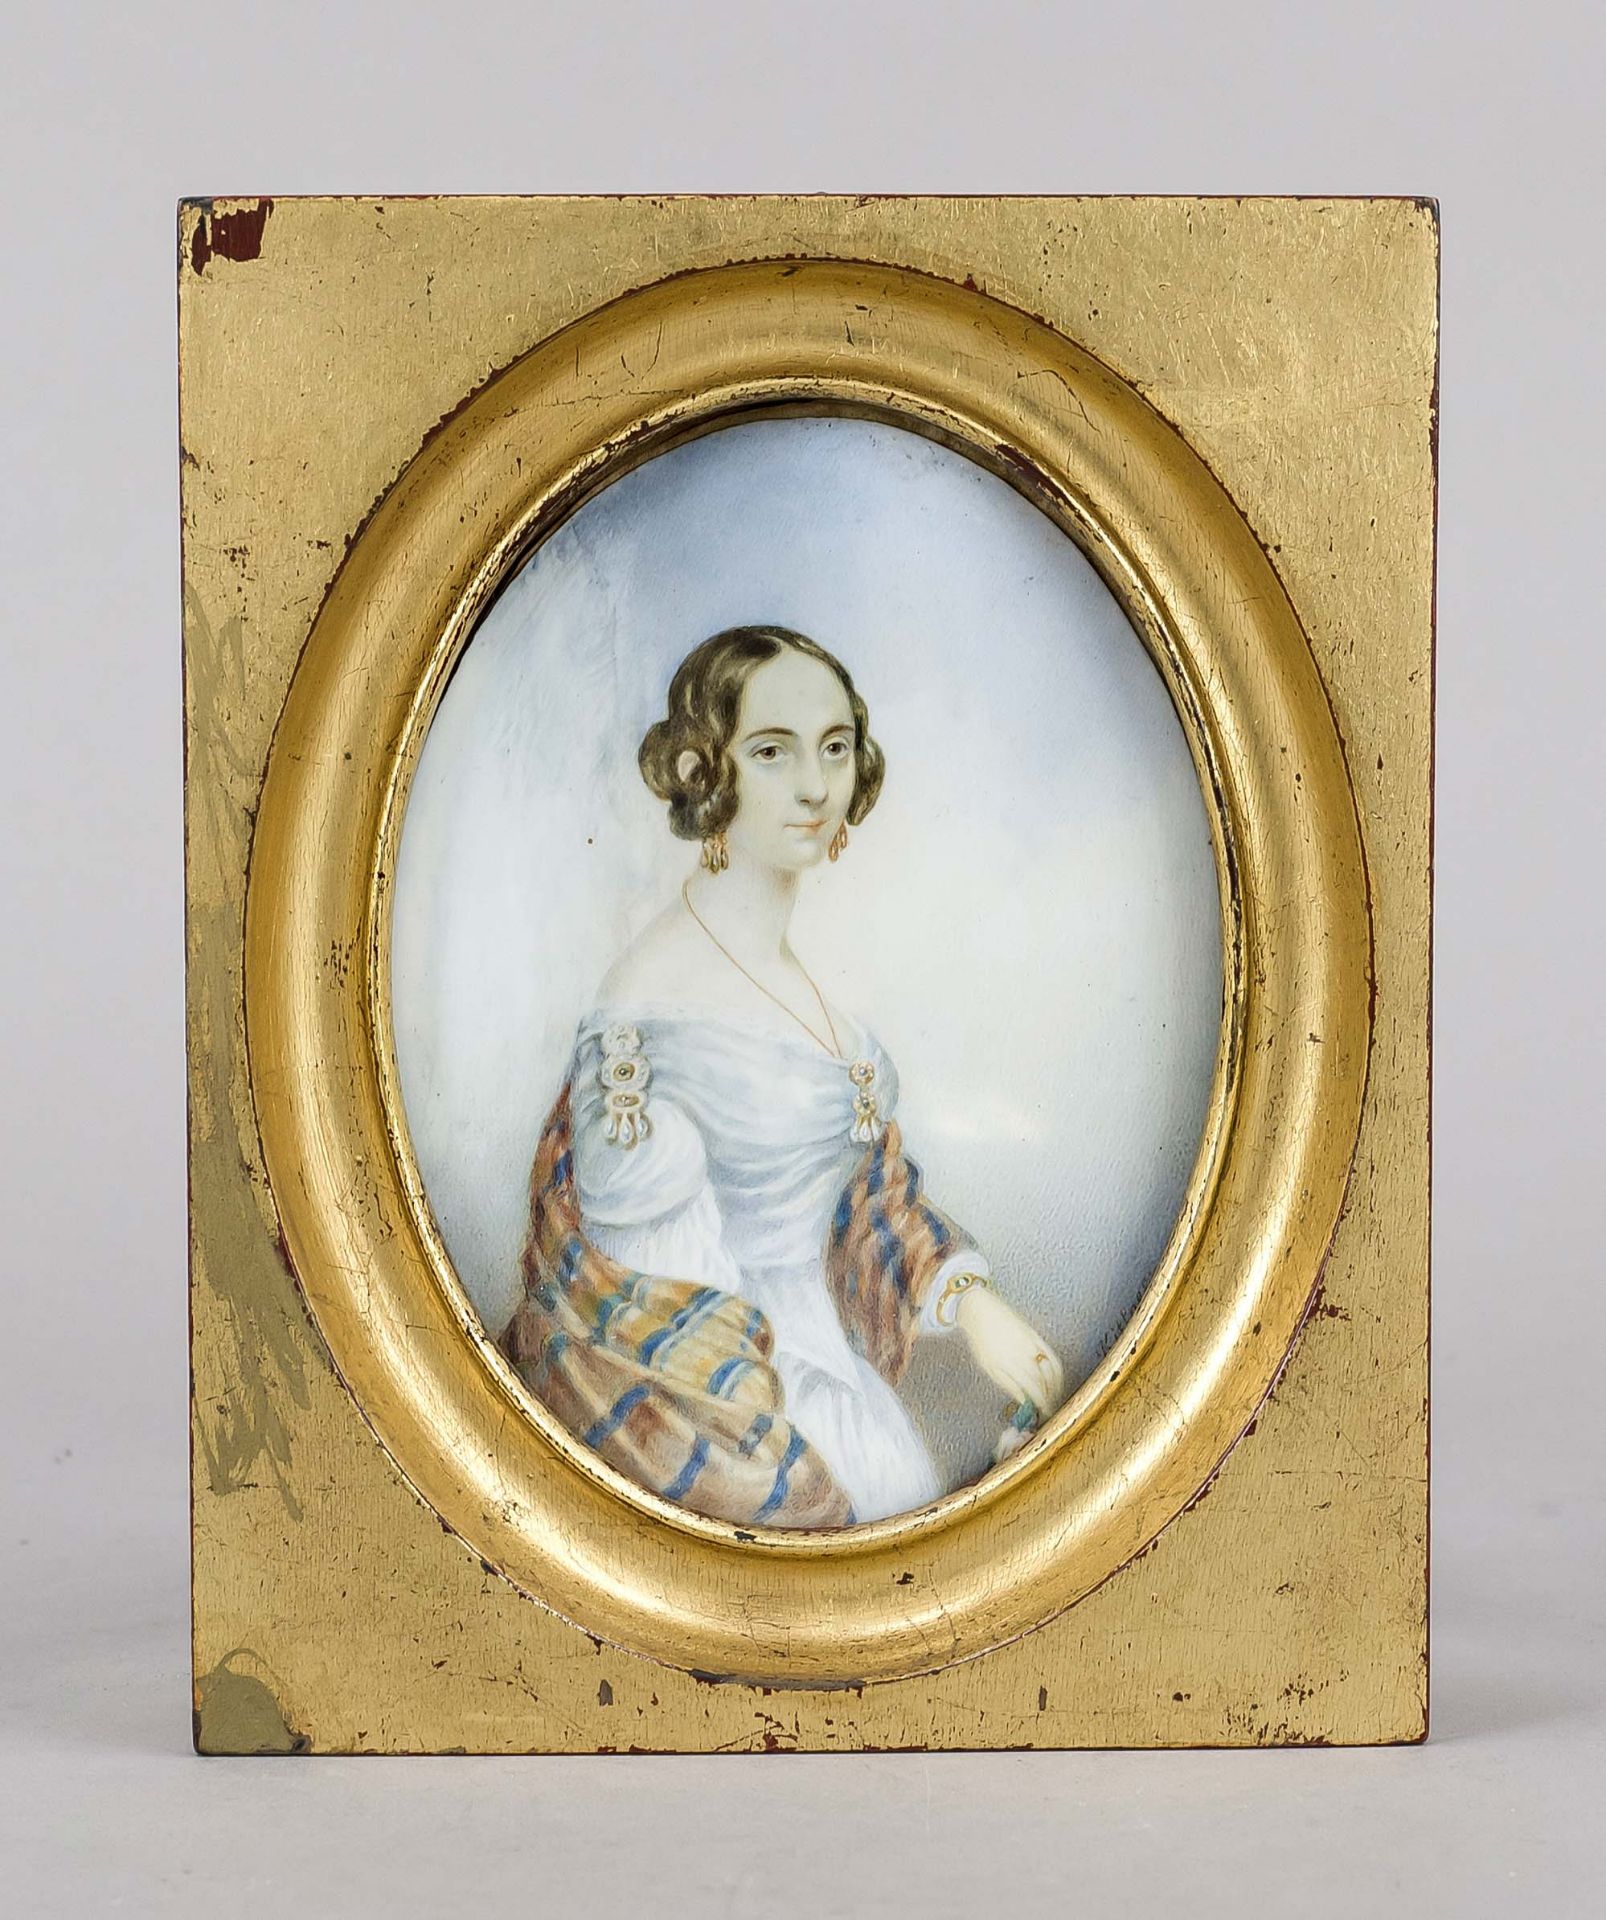 Large miniature, 19th century, polychrome tempera painting on bone panel, unopened, oval portrait of